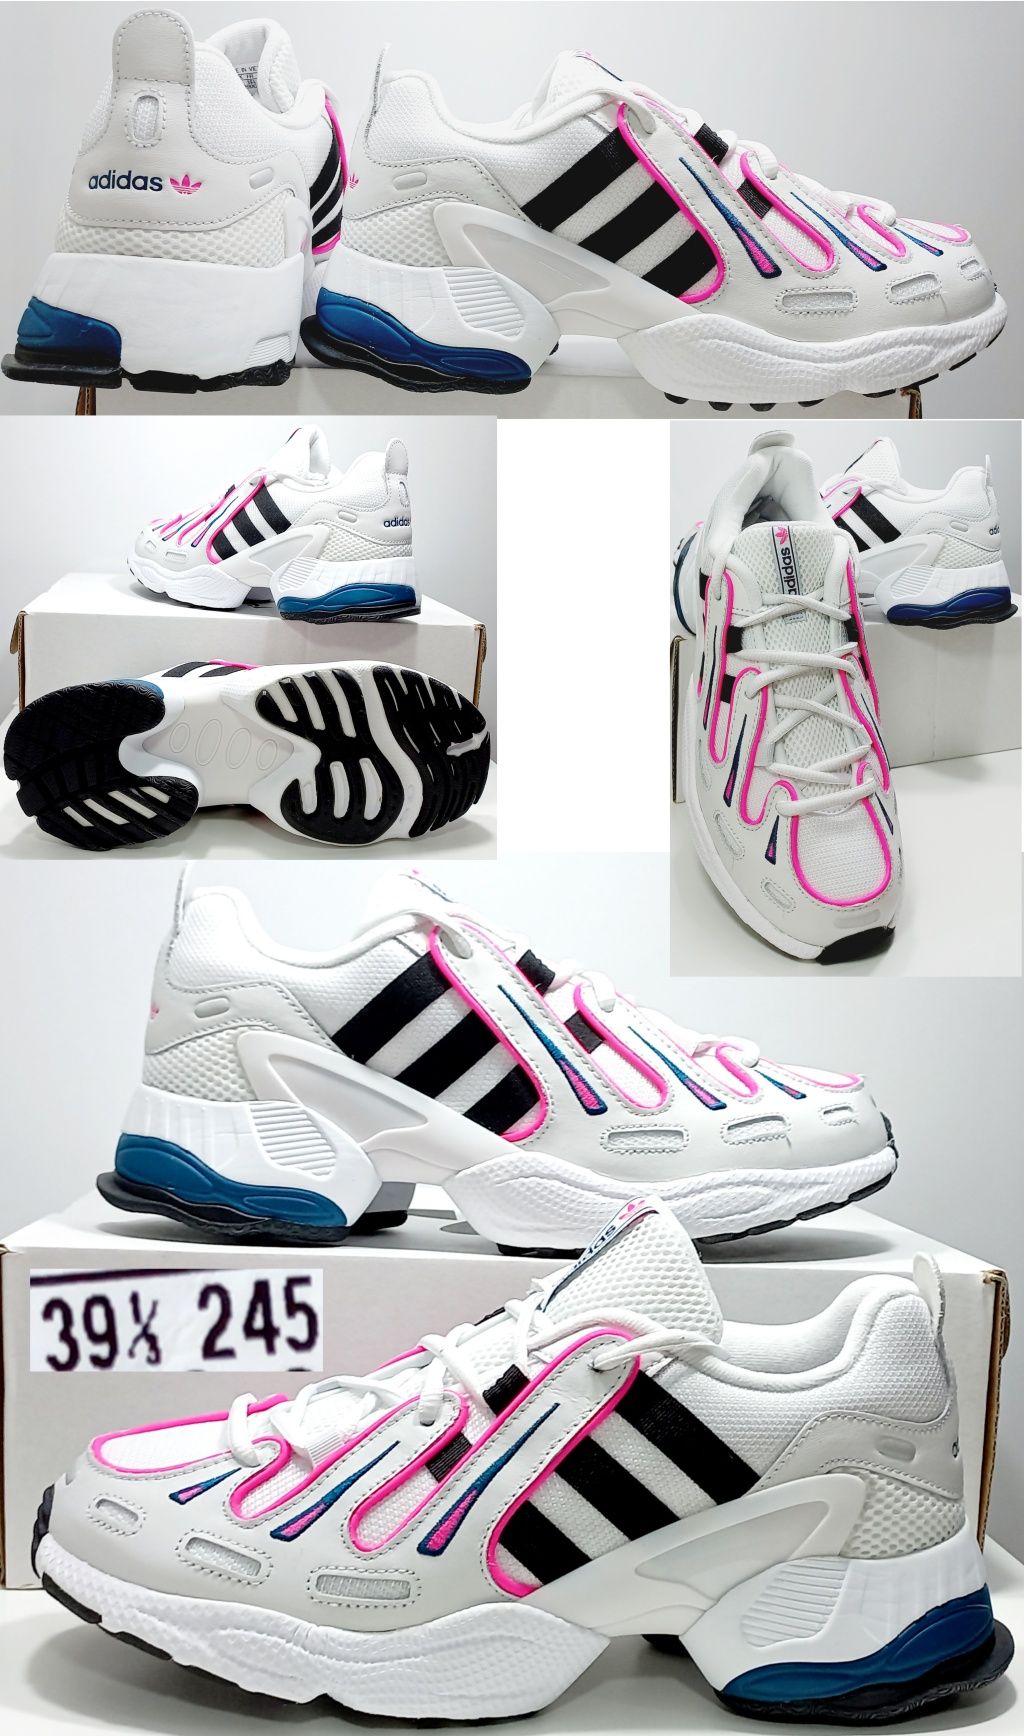 Adidas/Nike/Puma/Lotto/Hummel